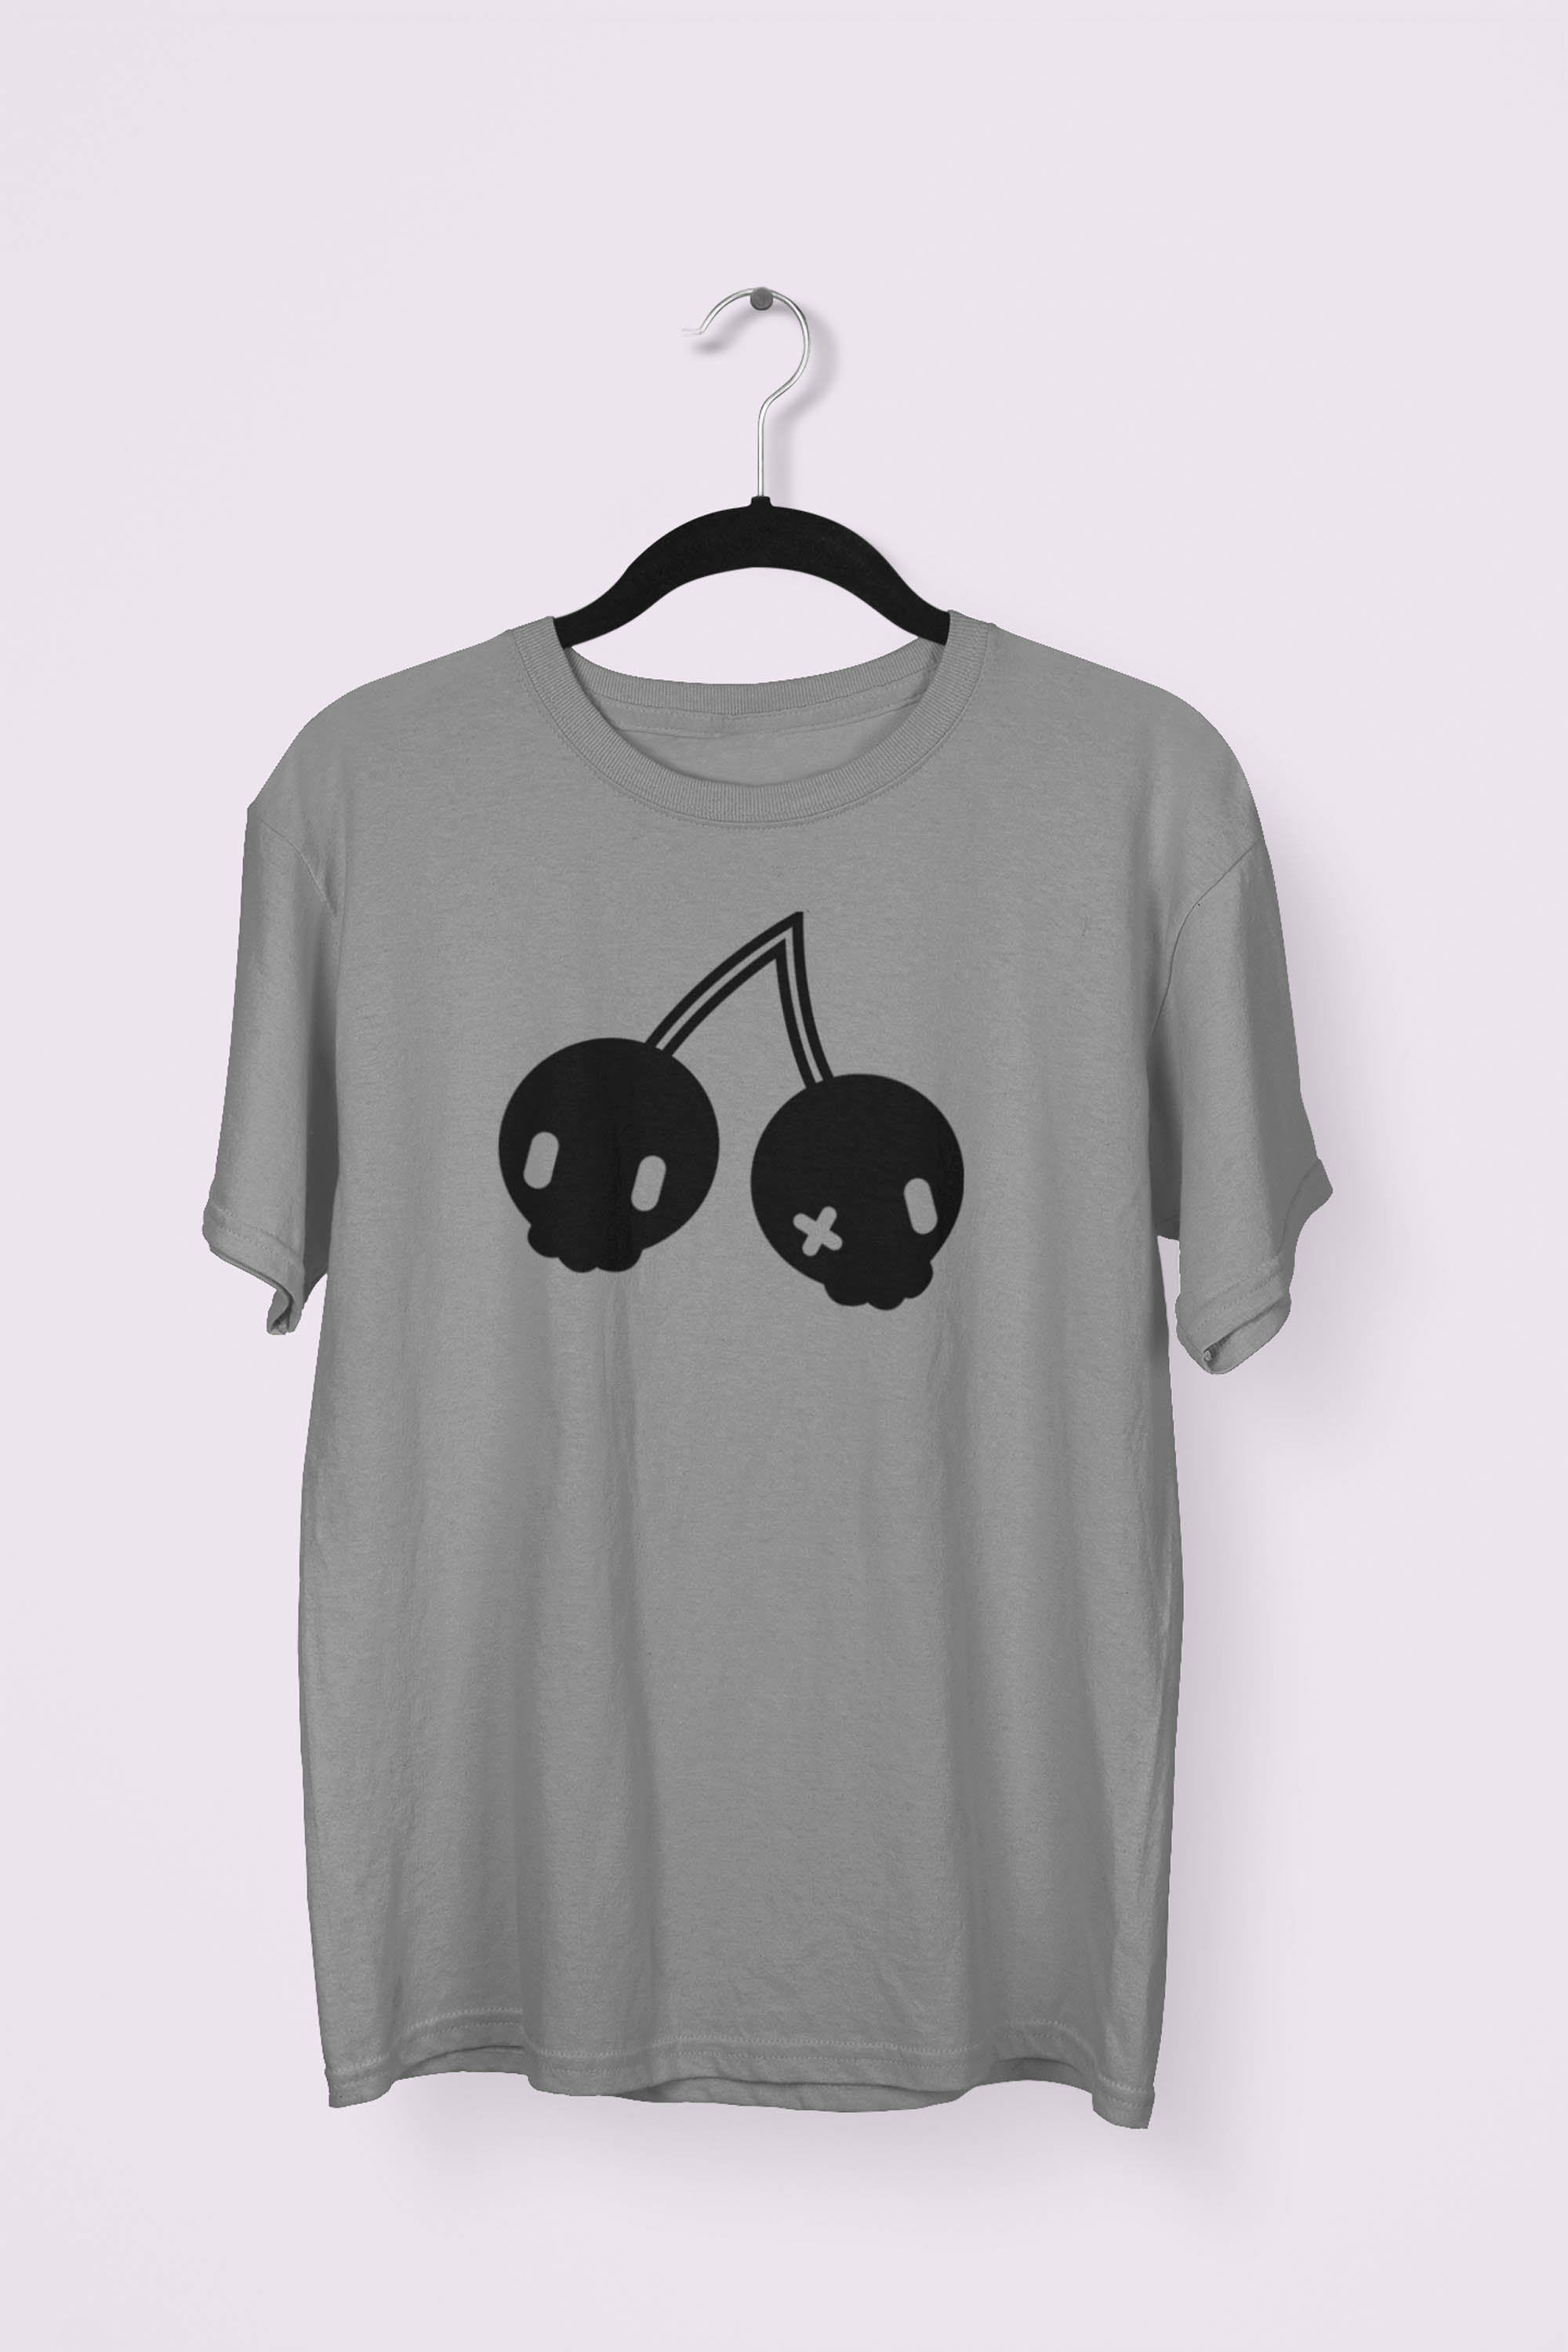 Cherry Skulls T-shirt by Dokkirii - Charcoal Grey